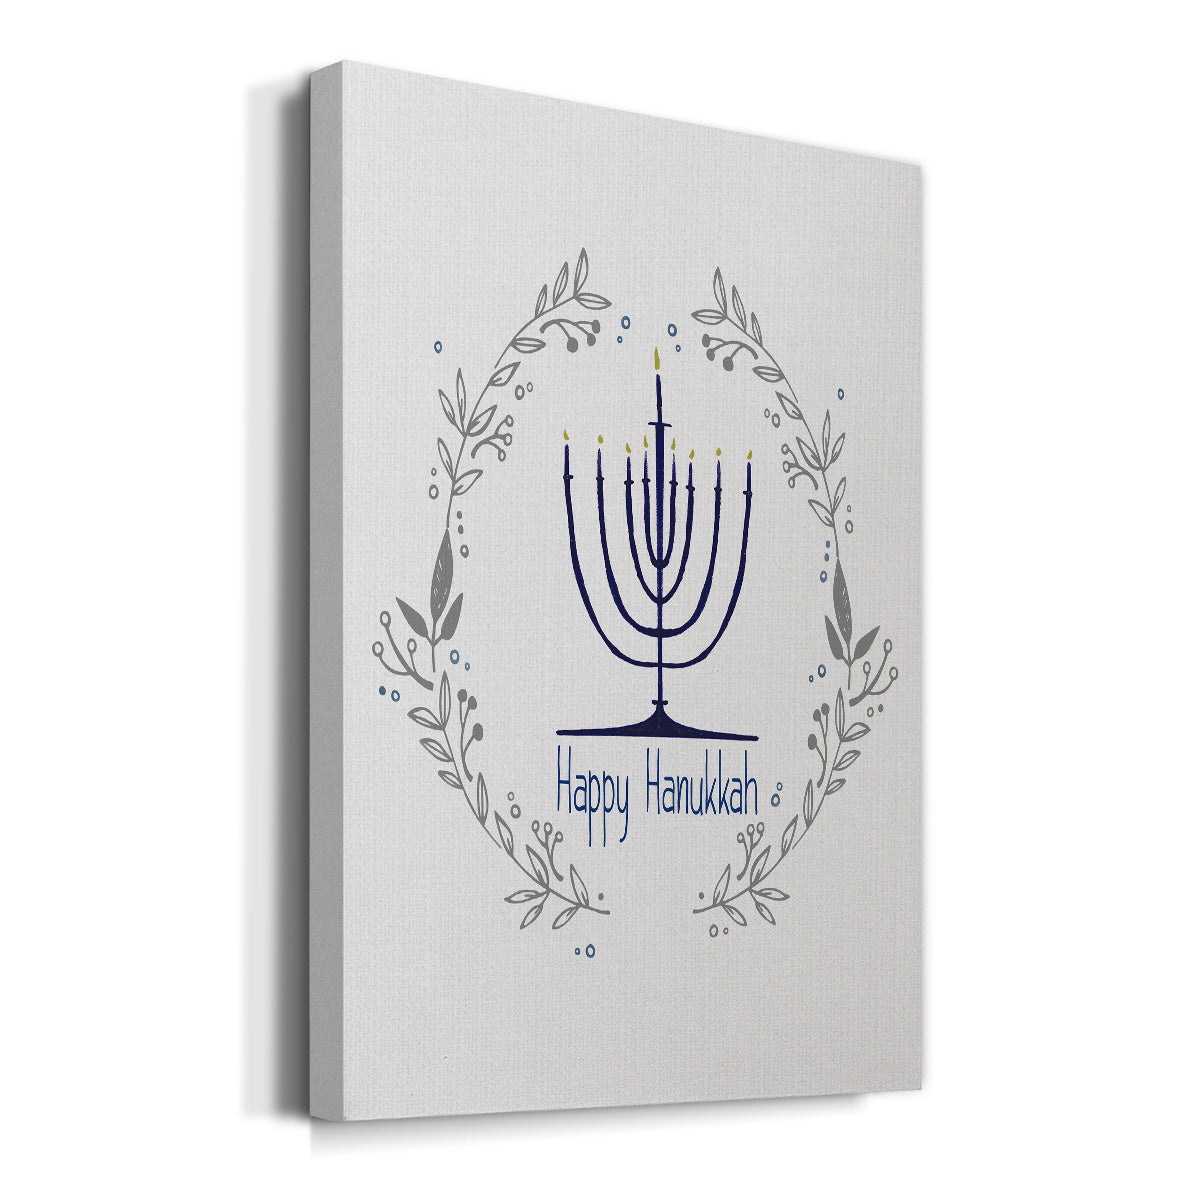 Happy Hanukkah II Premium Gallery Wrapped Canvas - Ready to Hang